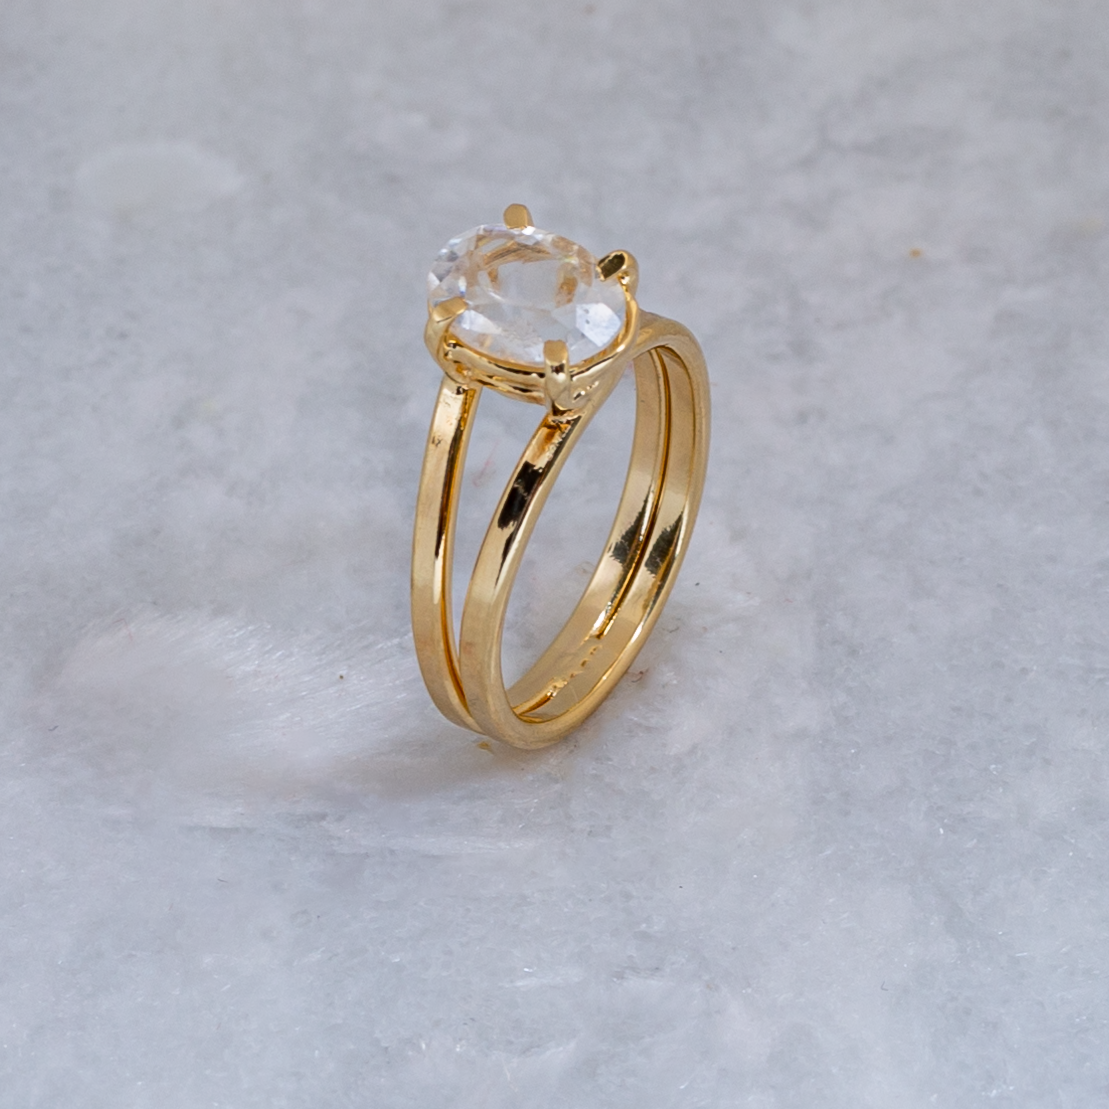 Clear Quartz - Royal Ring - Adjustable - 18k Gold Plated